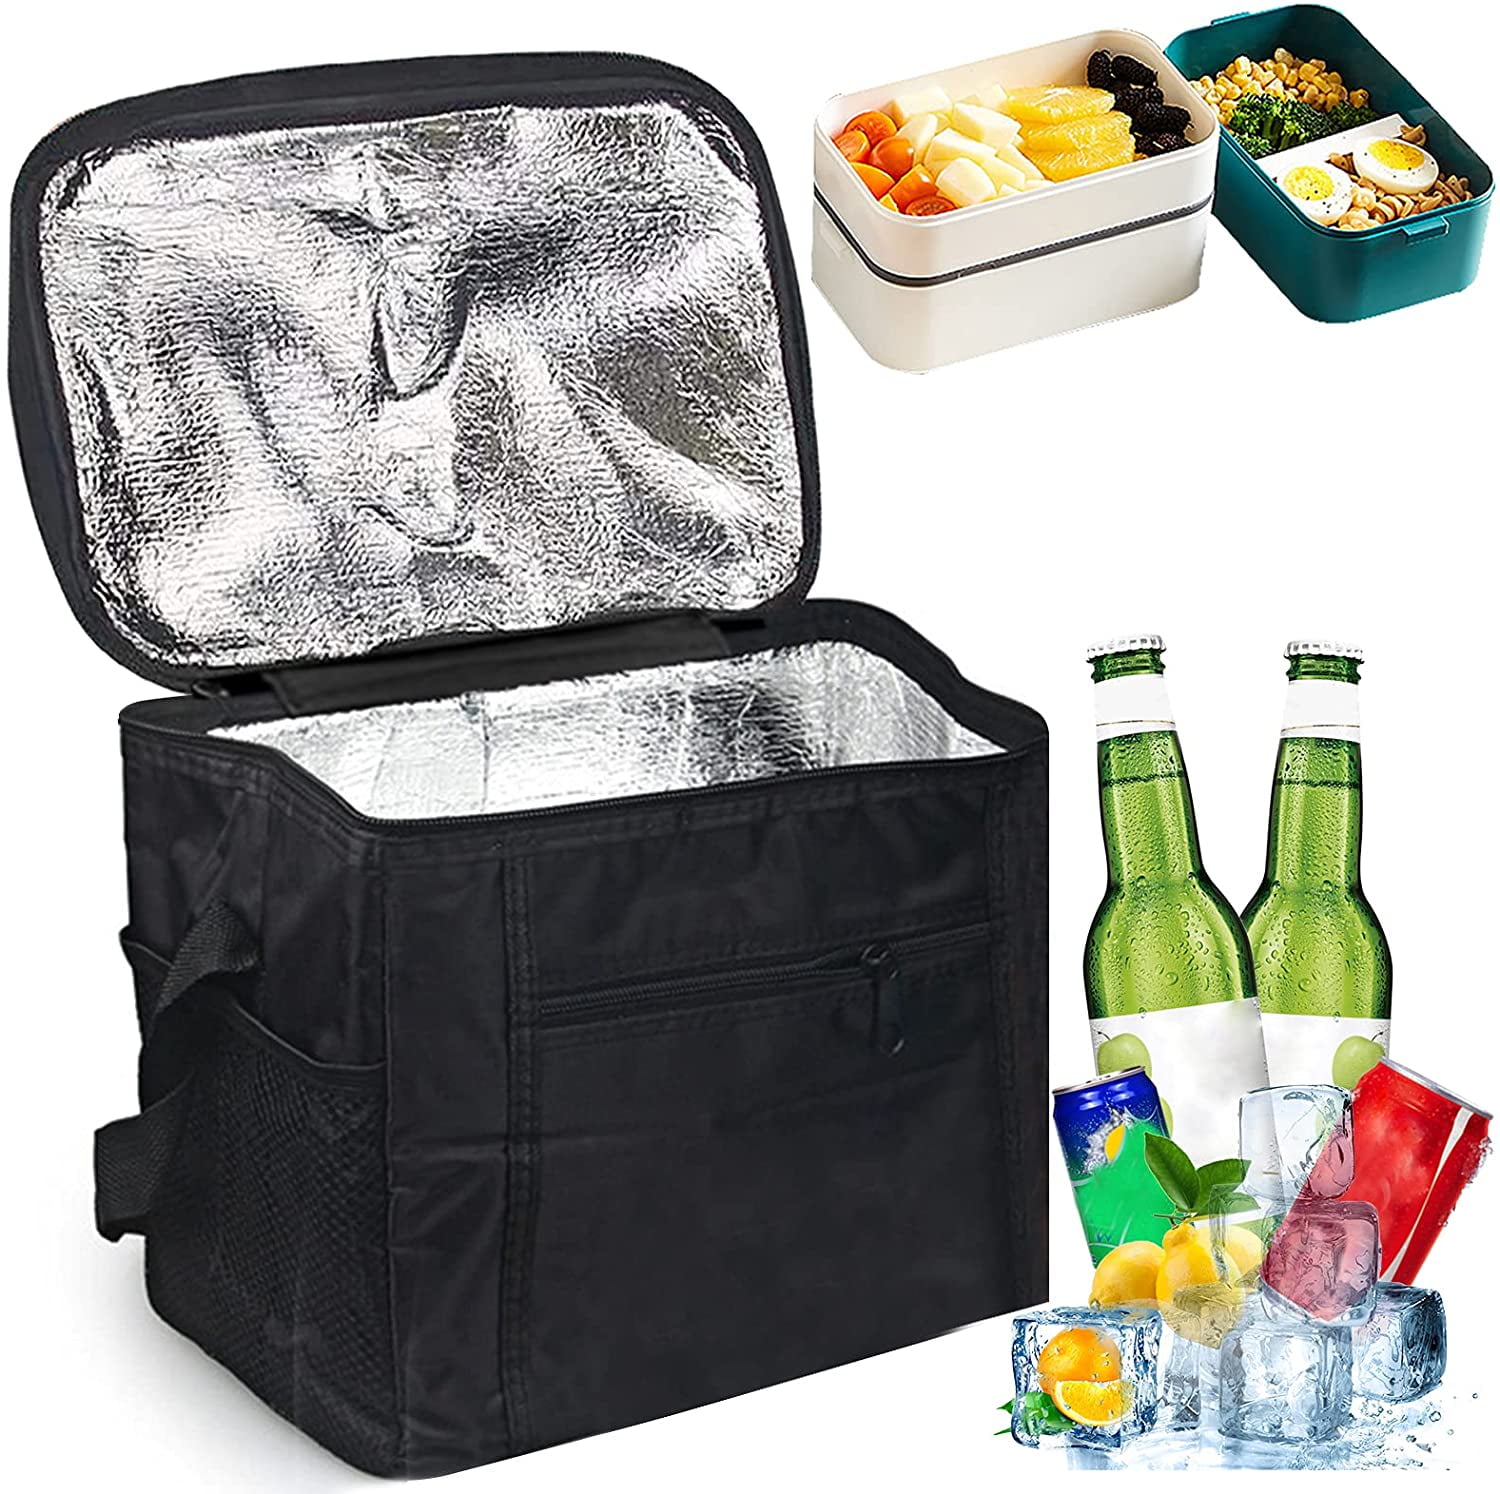 Thermal Picnic Soft Foldable Cooler Bag Product Details